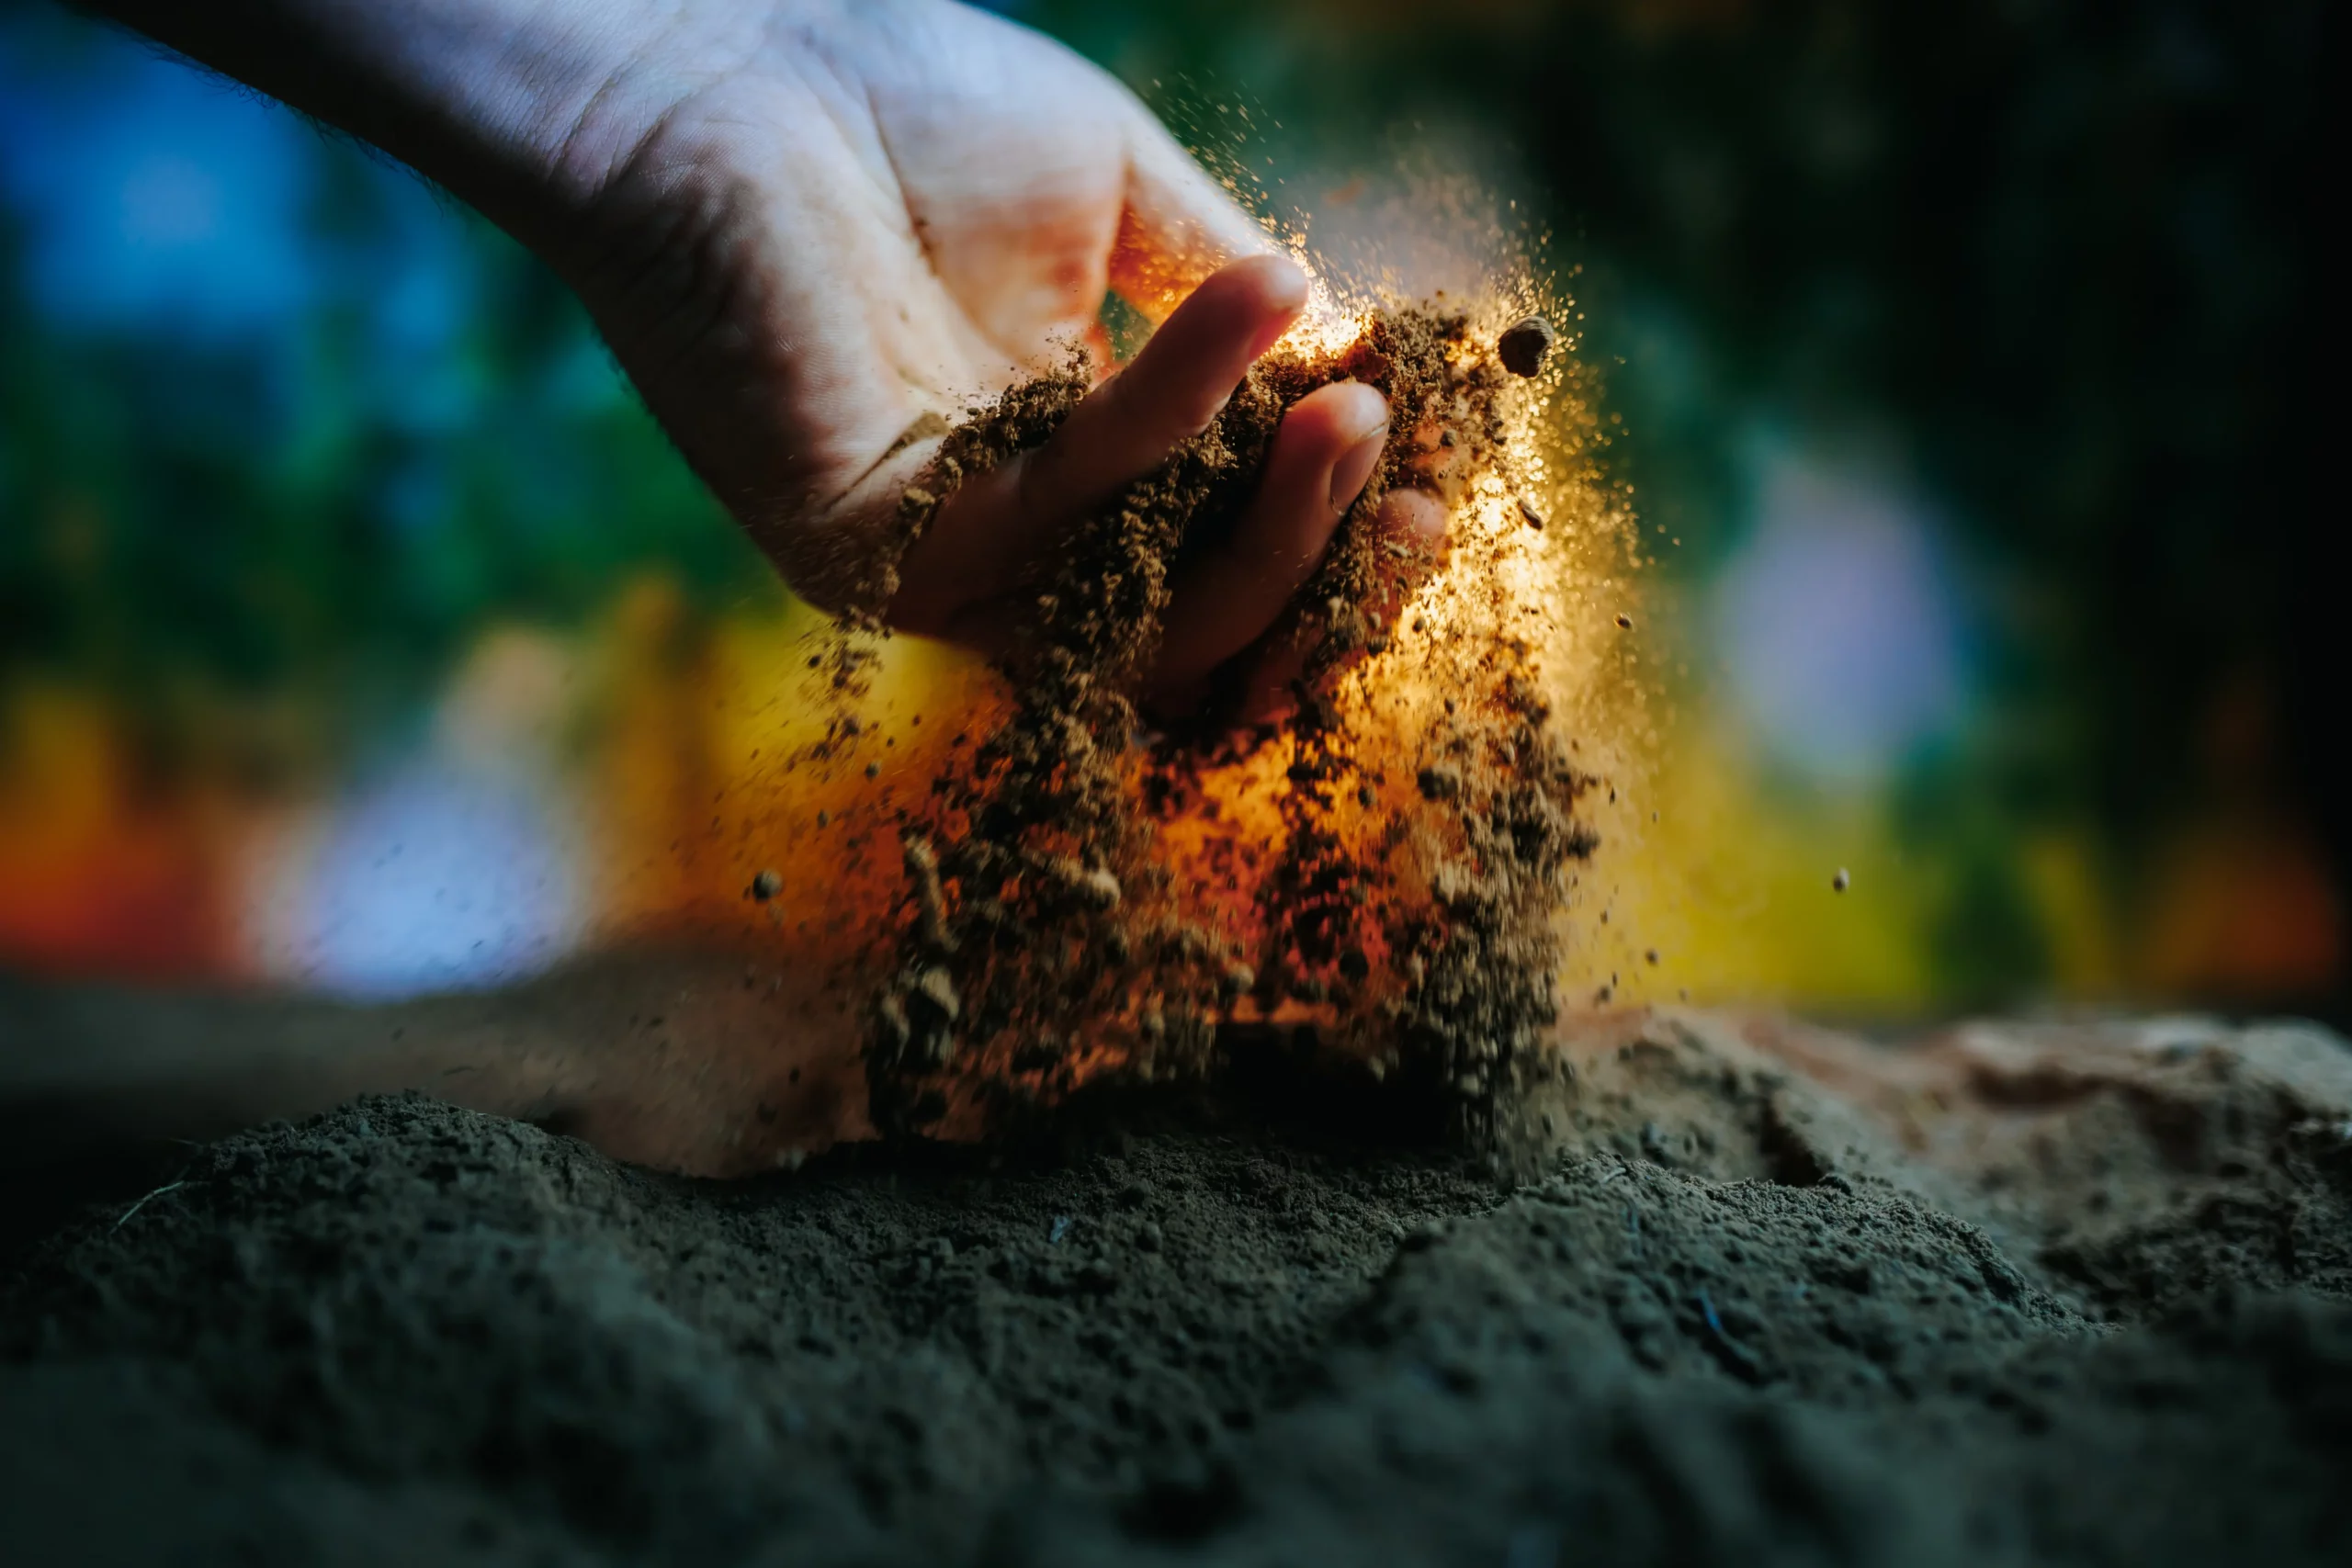 Hand picking up soil